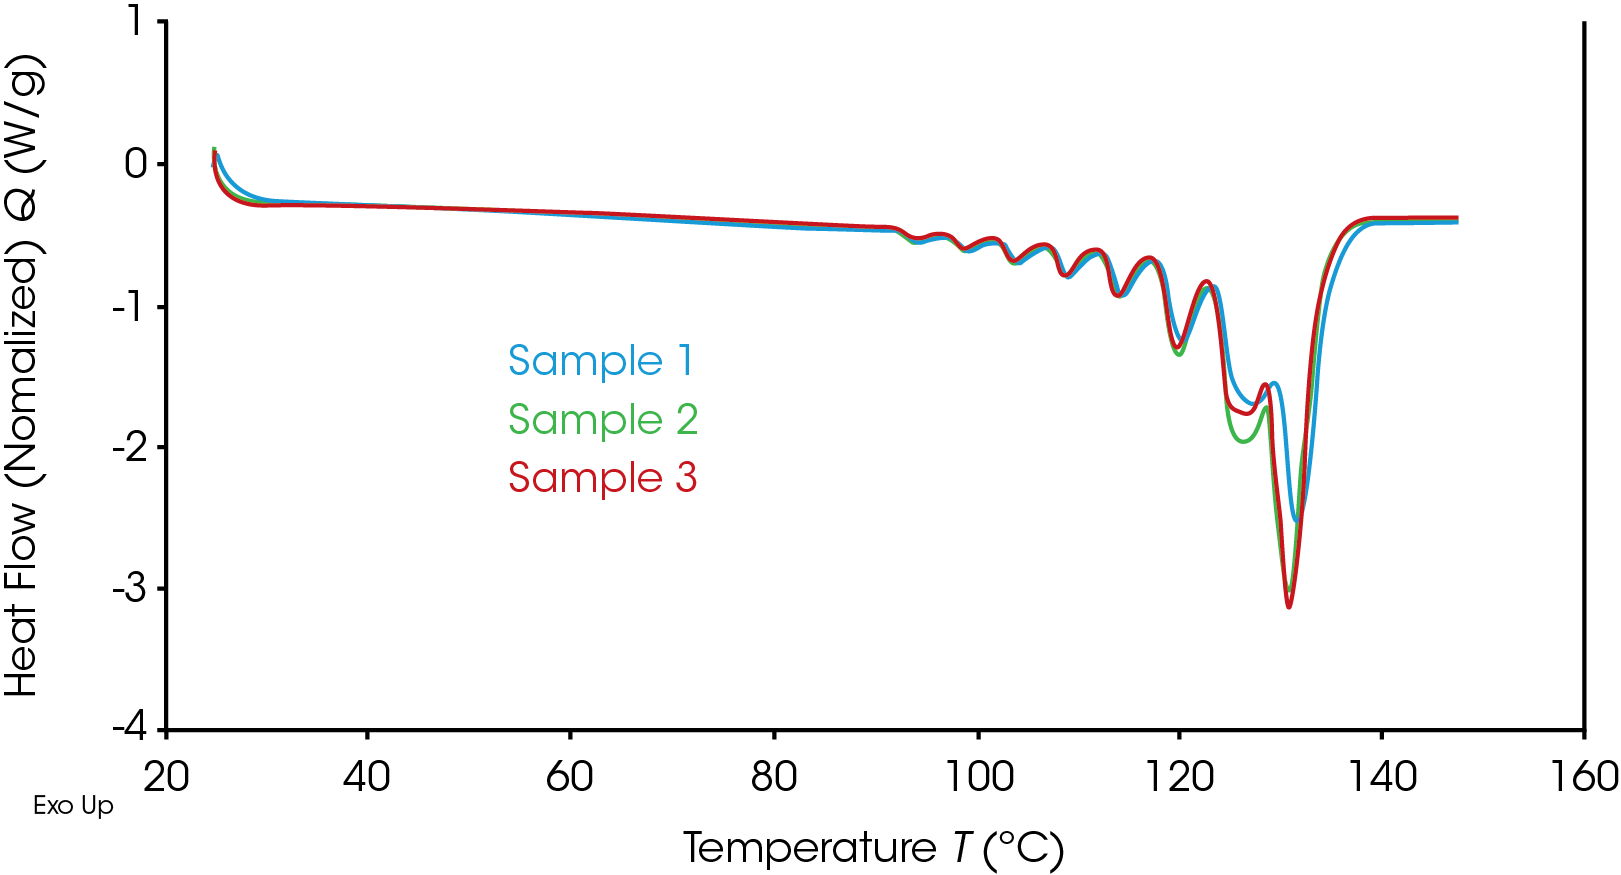 Figure 5. Re-heat data after the SSA methodology.